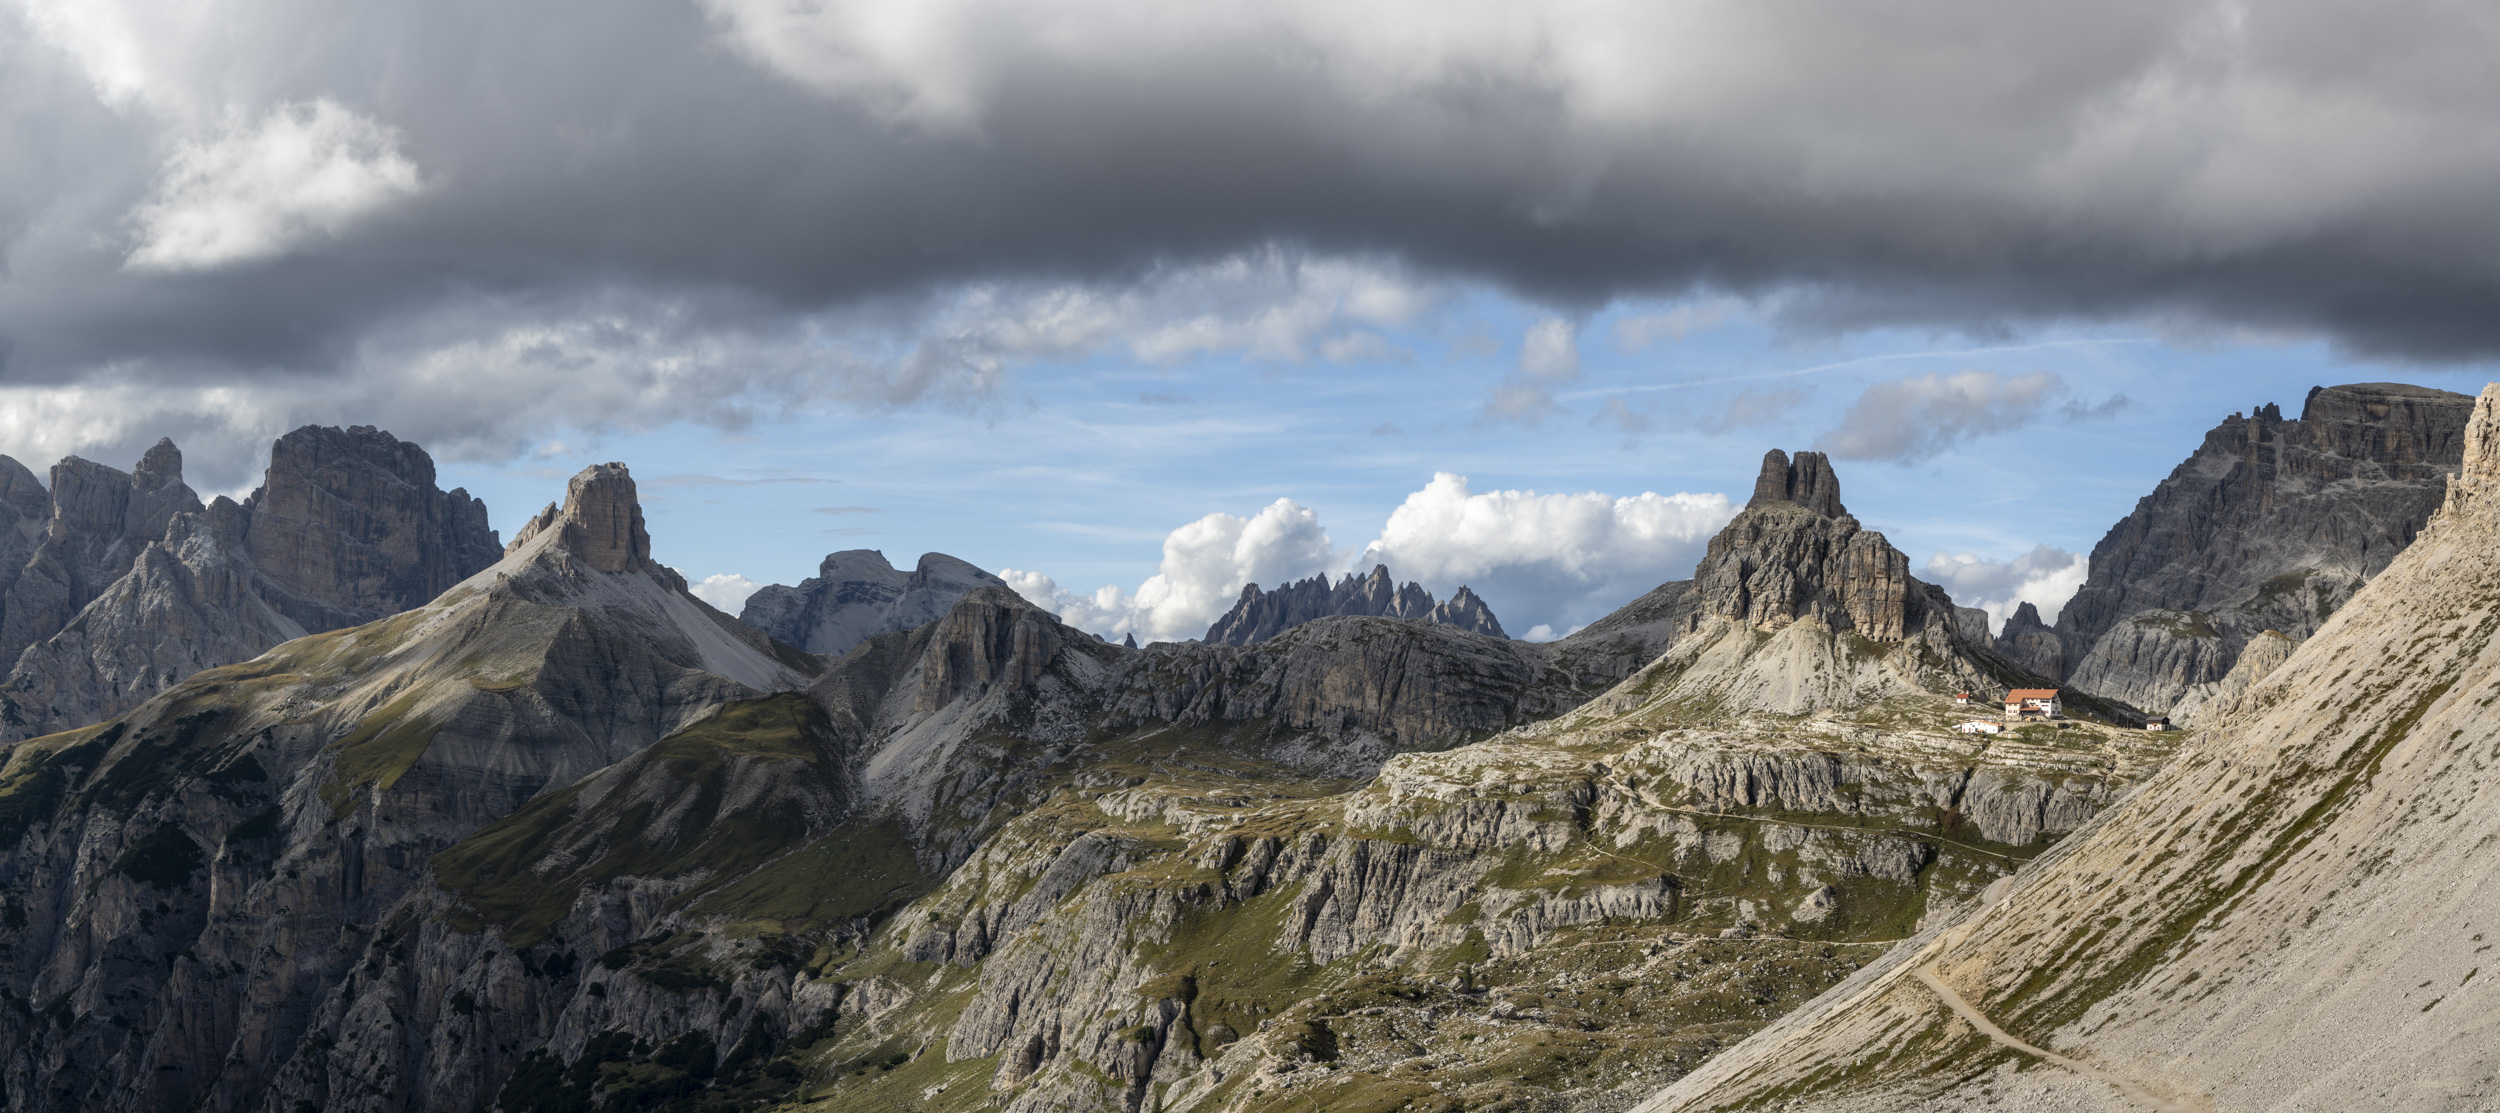 View towards Rifugio Locatelli, Tre Cime, Dolomites, Italy